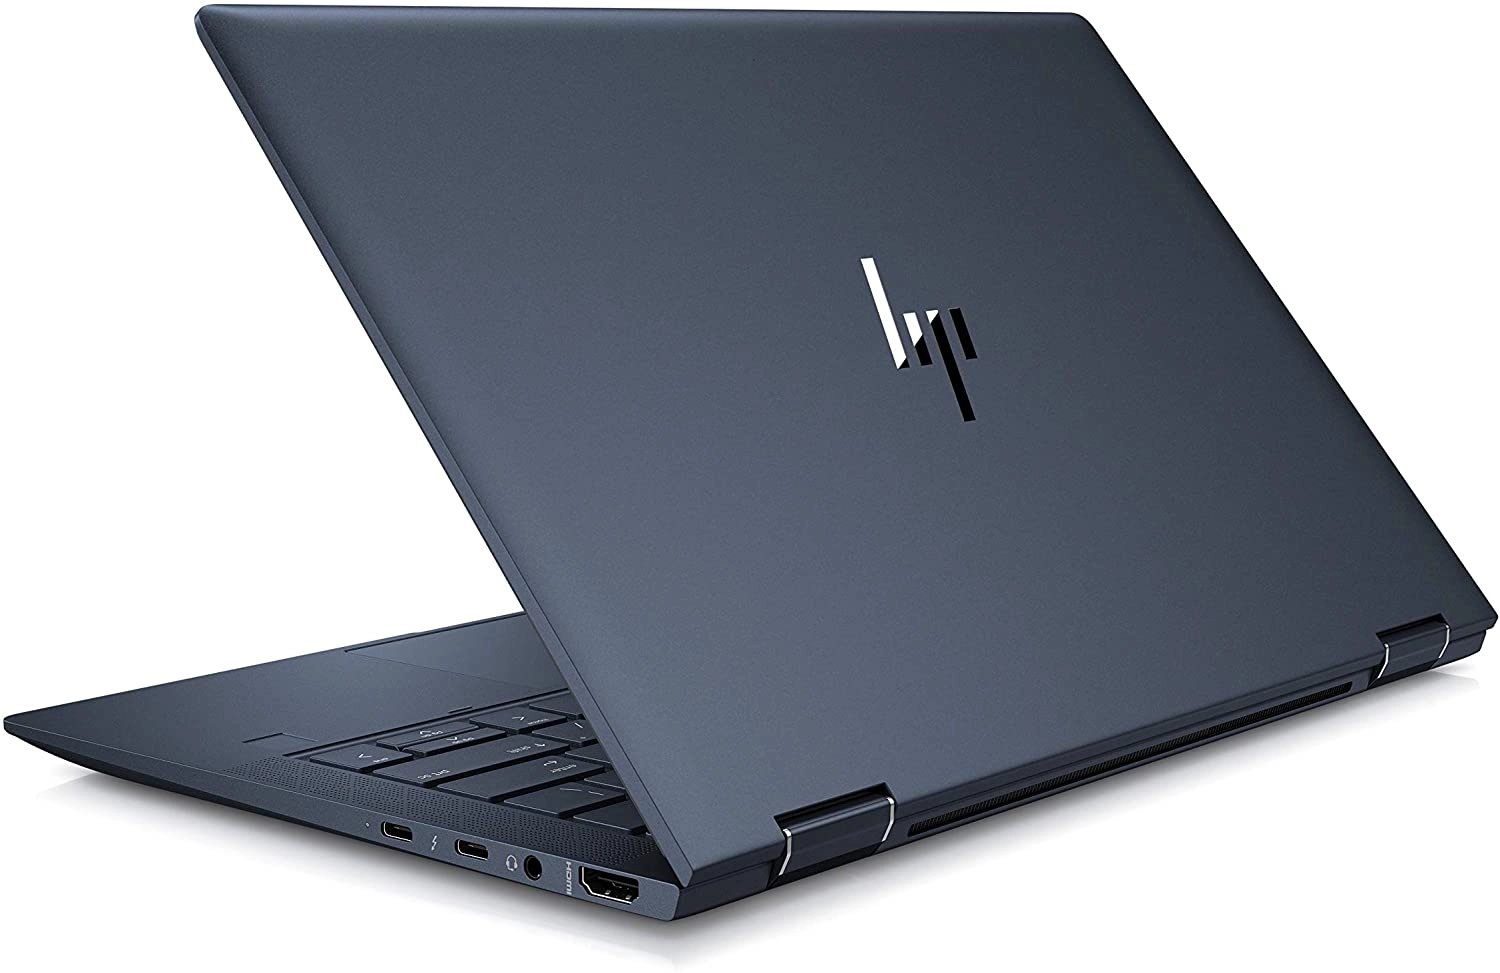 HP Elite Dragonfly laptop image